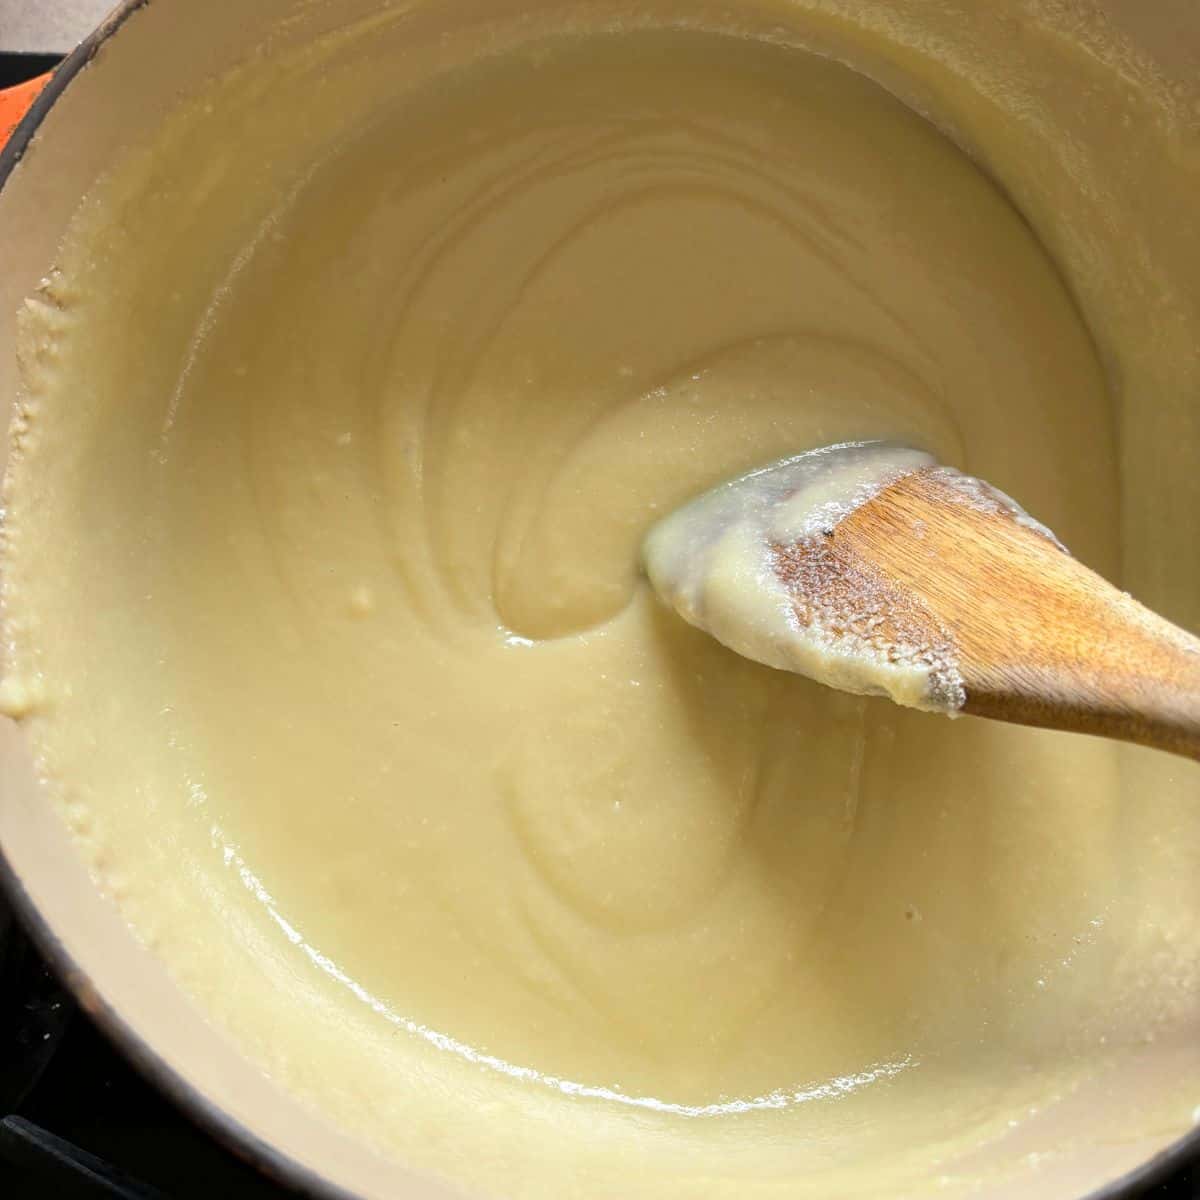 Wooden spoon stirring smooth mixture in pan.